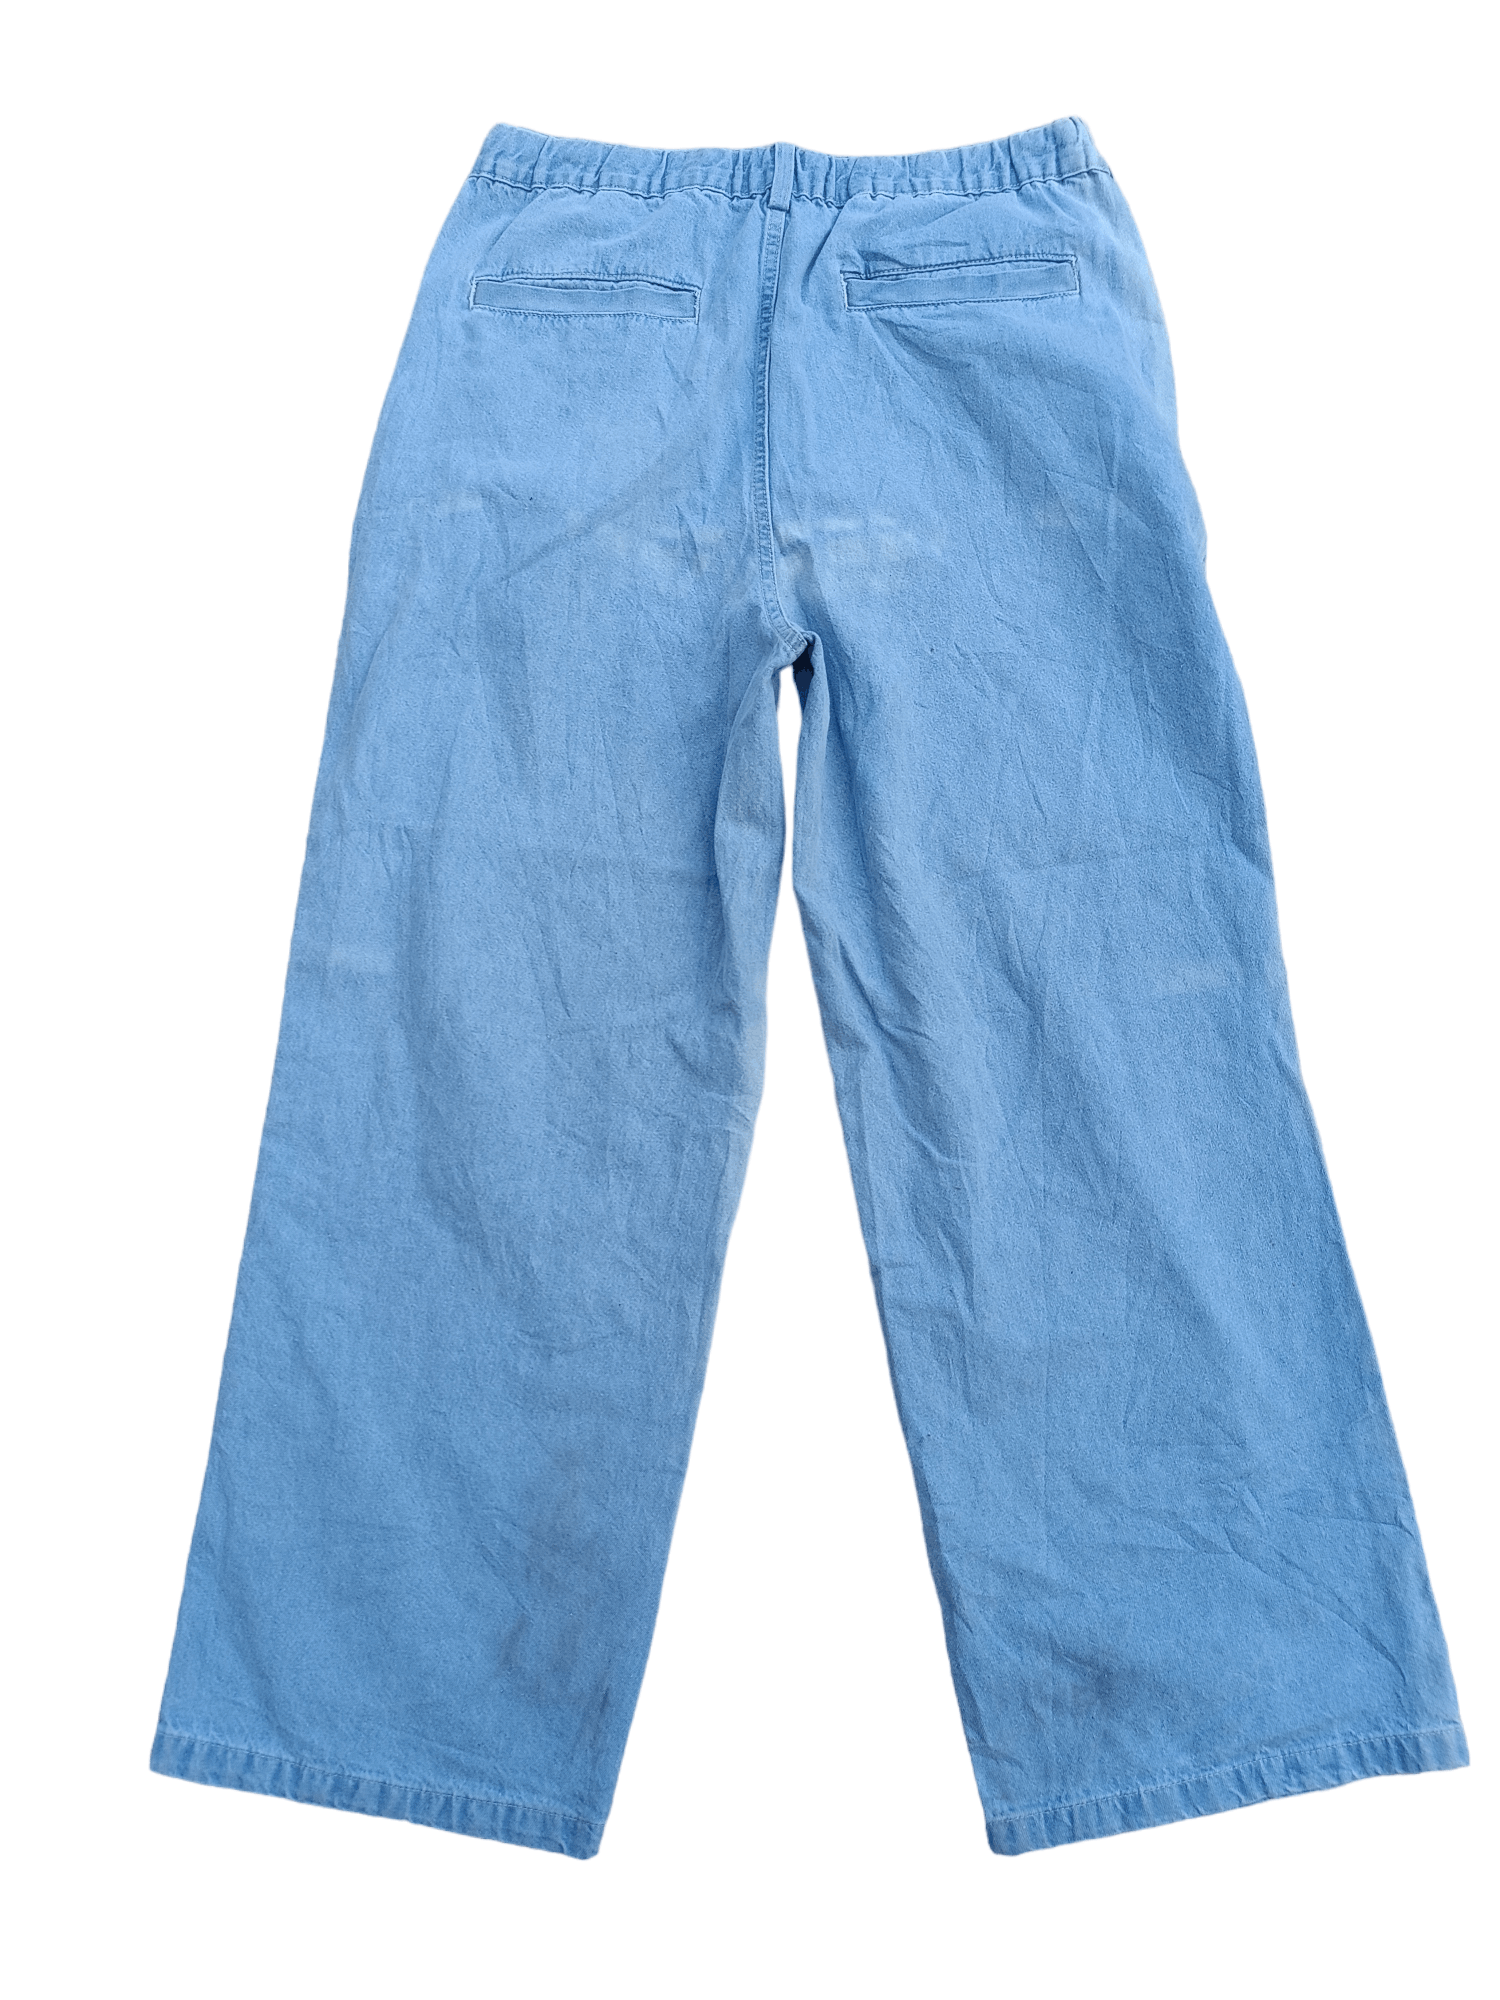 Japanese Brand Vintage Japanese Gu Baggy Style Flare Jeans 30x30 Size US 32 / EU 48 - 5 Thumbnail